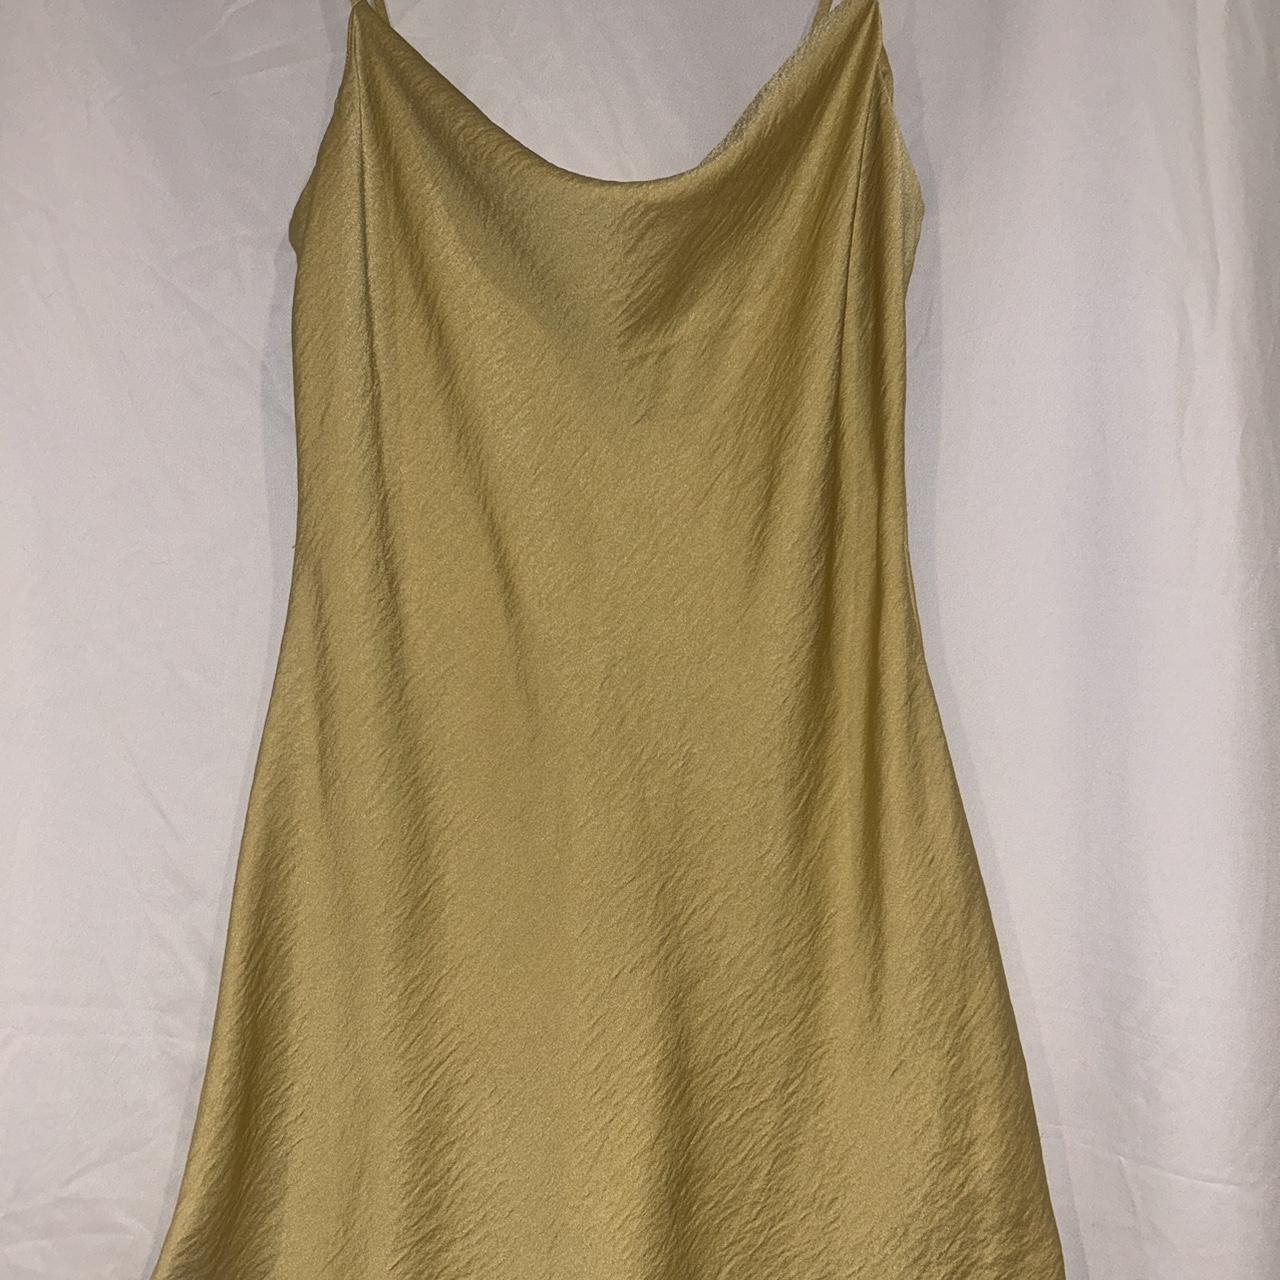 Fiestar Mini Gold Dress size Medium Preowned. Top of... - Depop